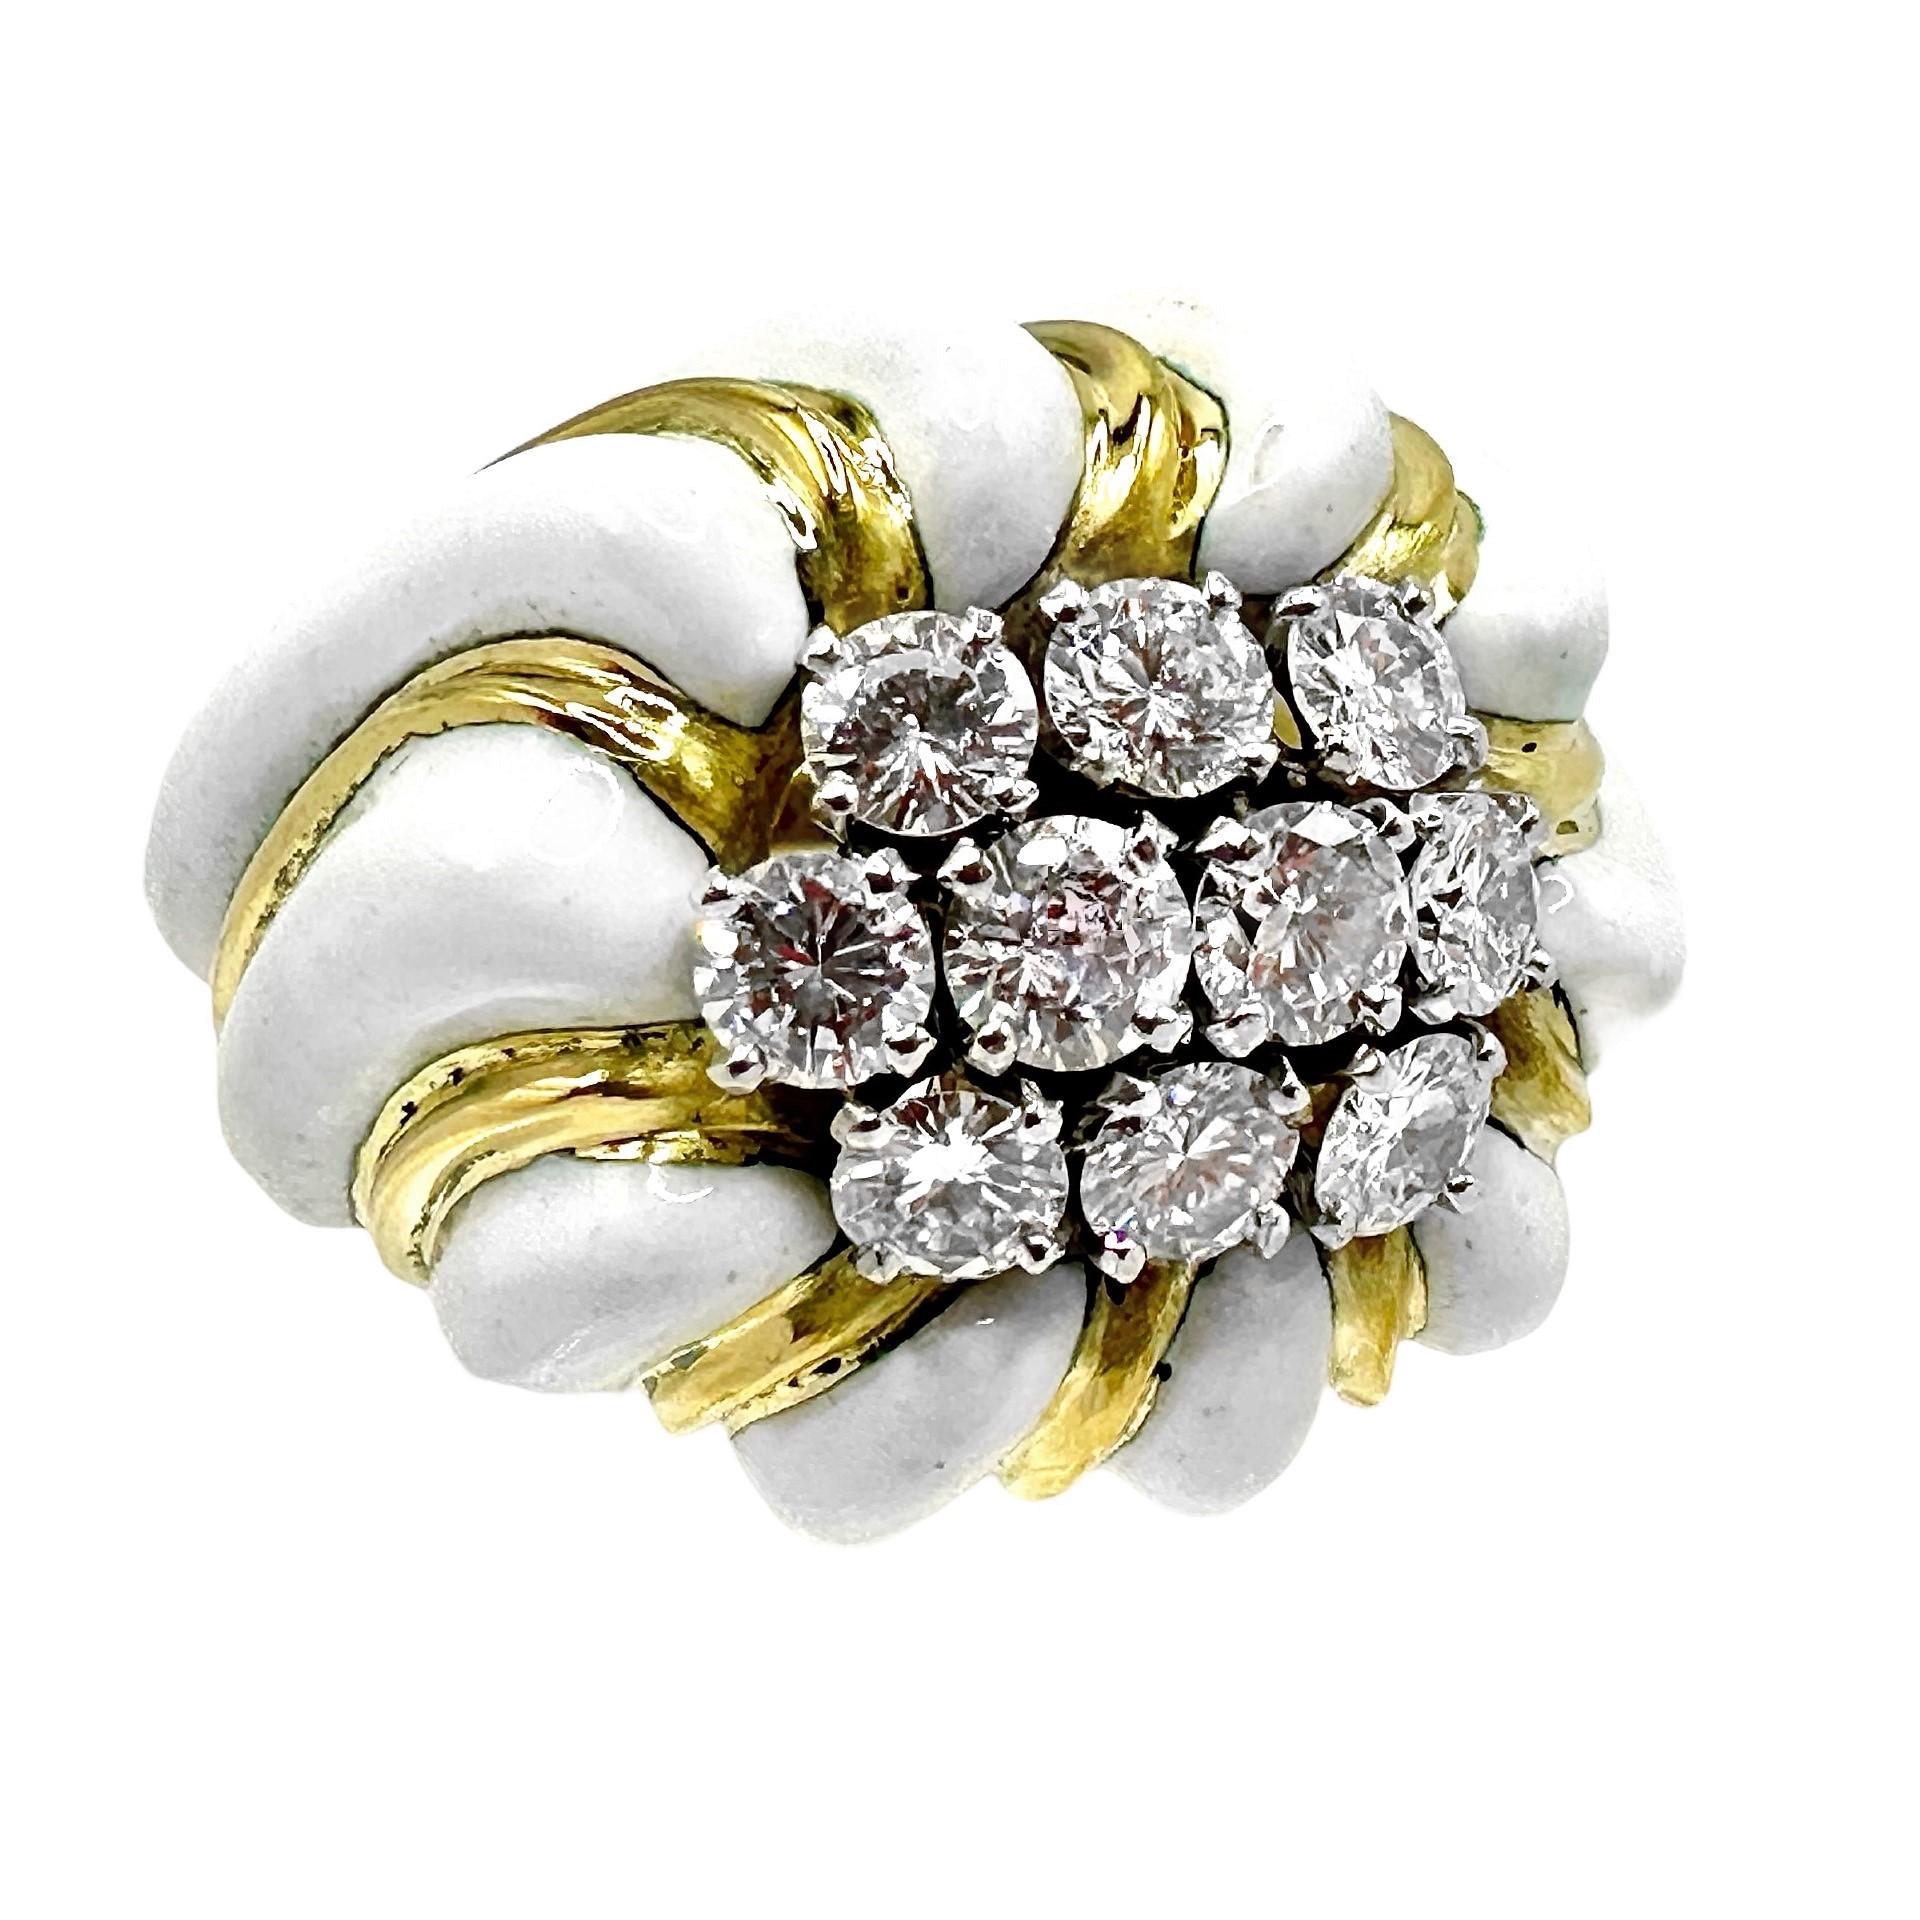 Modern David Webb White Enamel and Diamond Ring in 18k Yellow Gold and Platinum